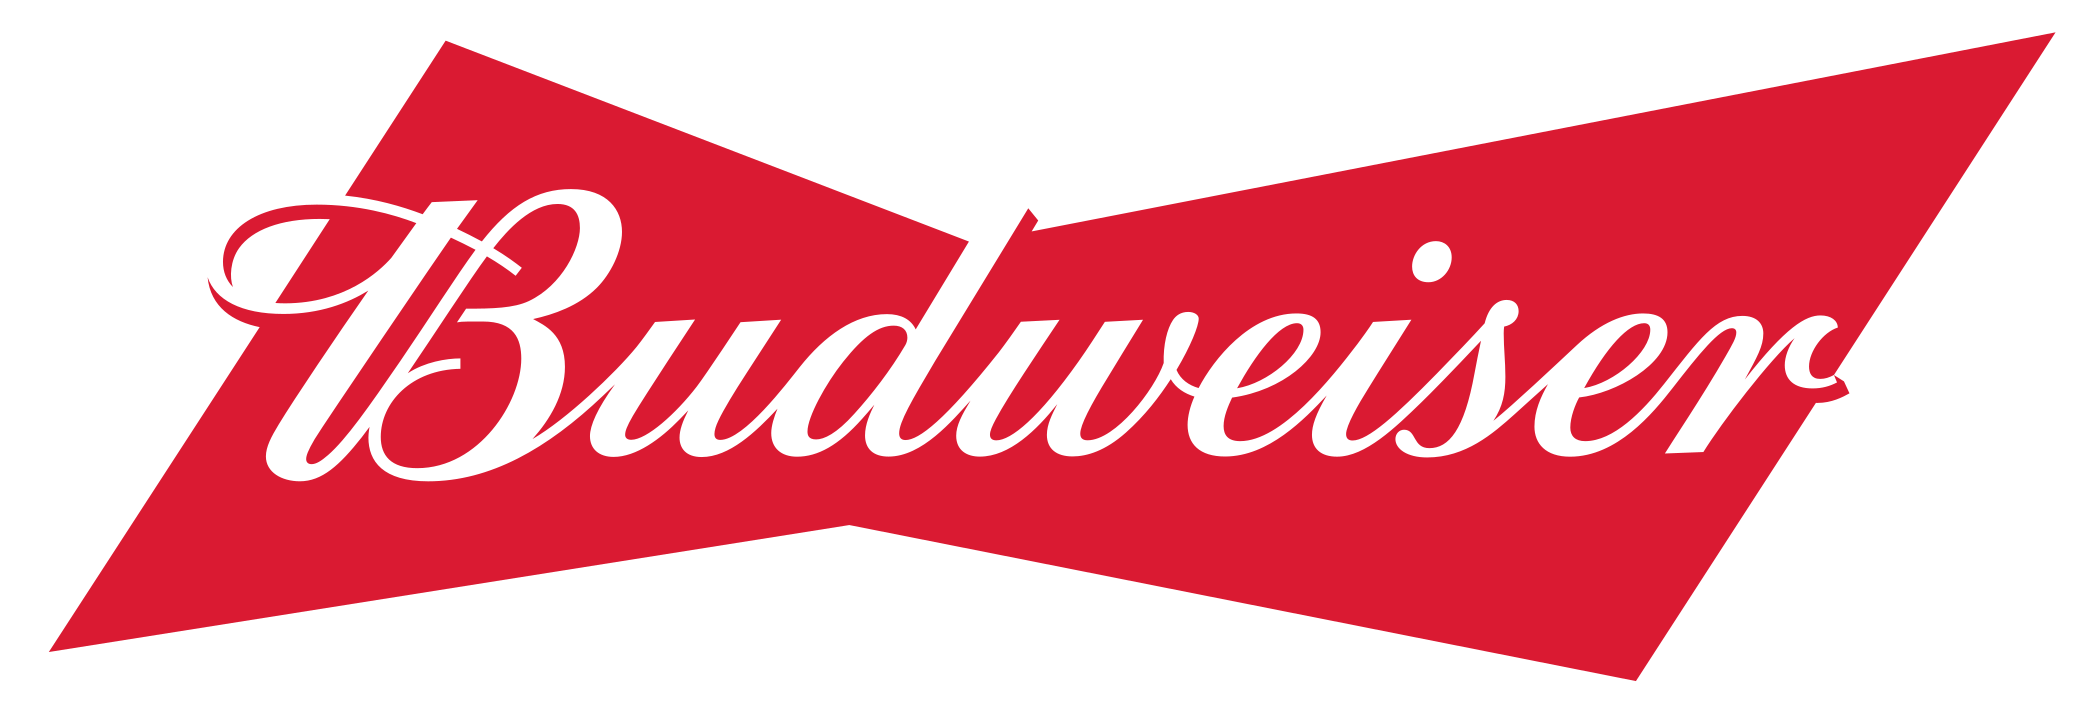 budweiser logo 1 - Budweiser Logo